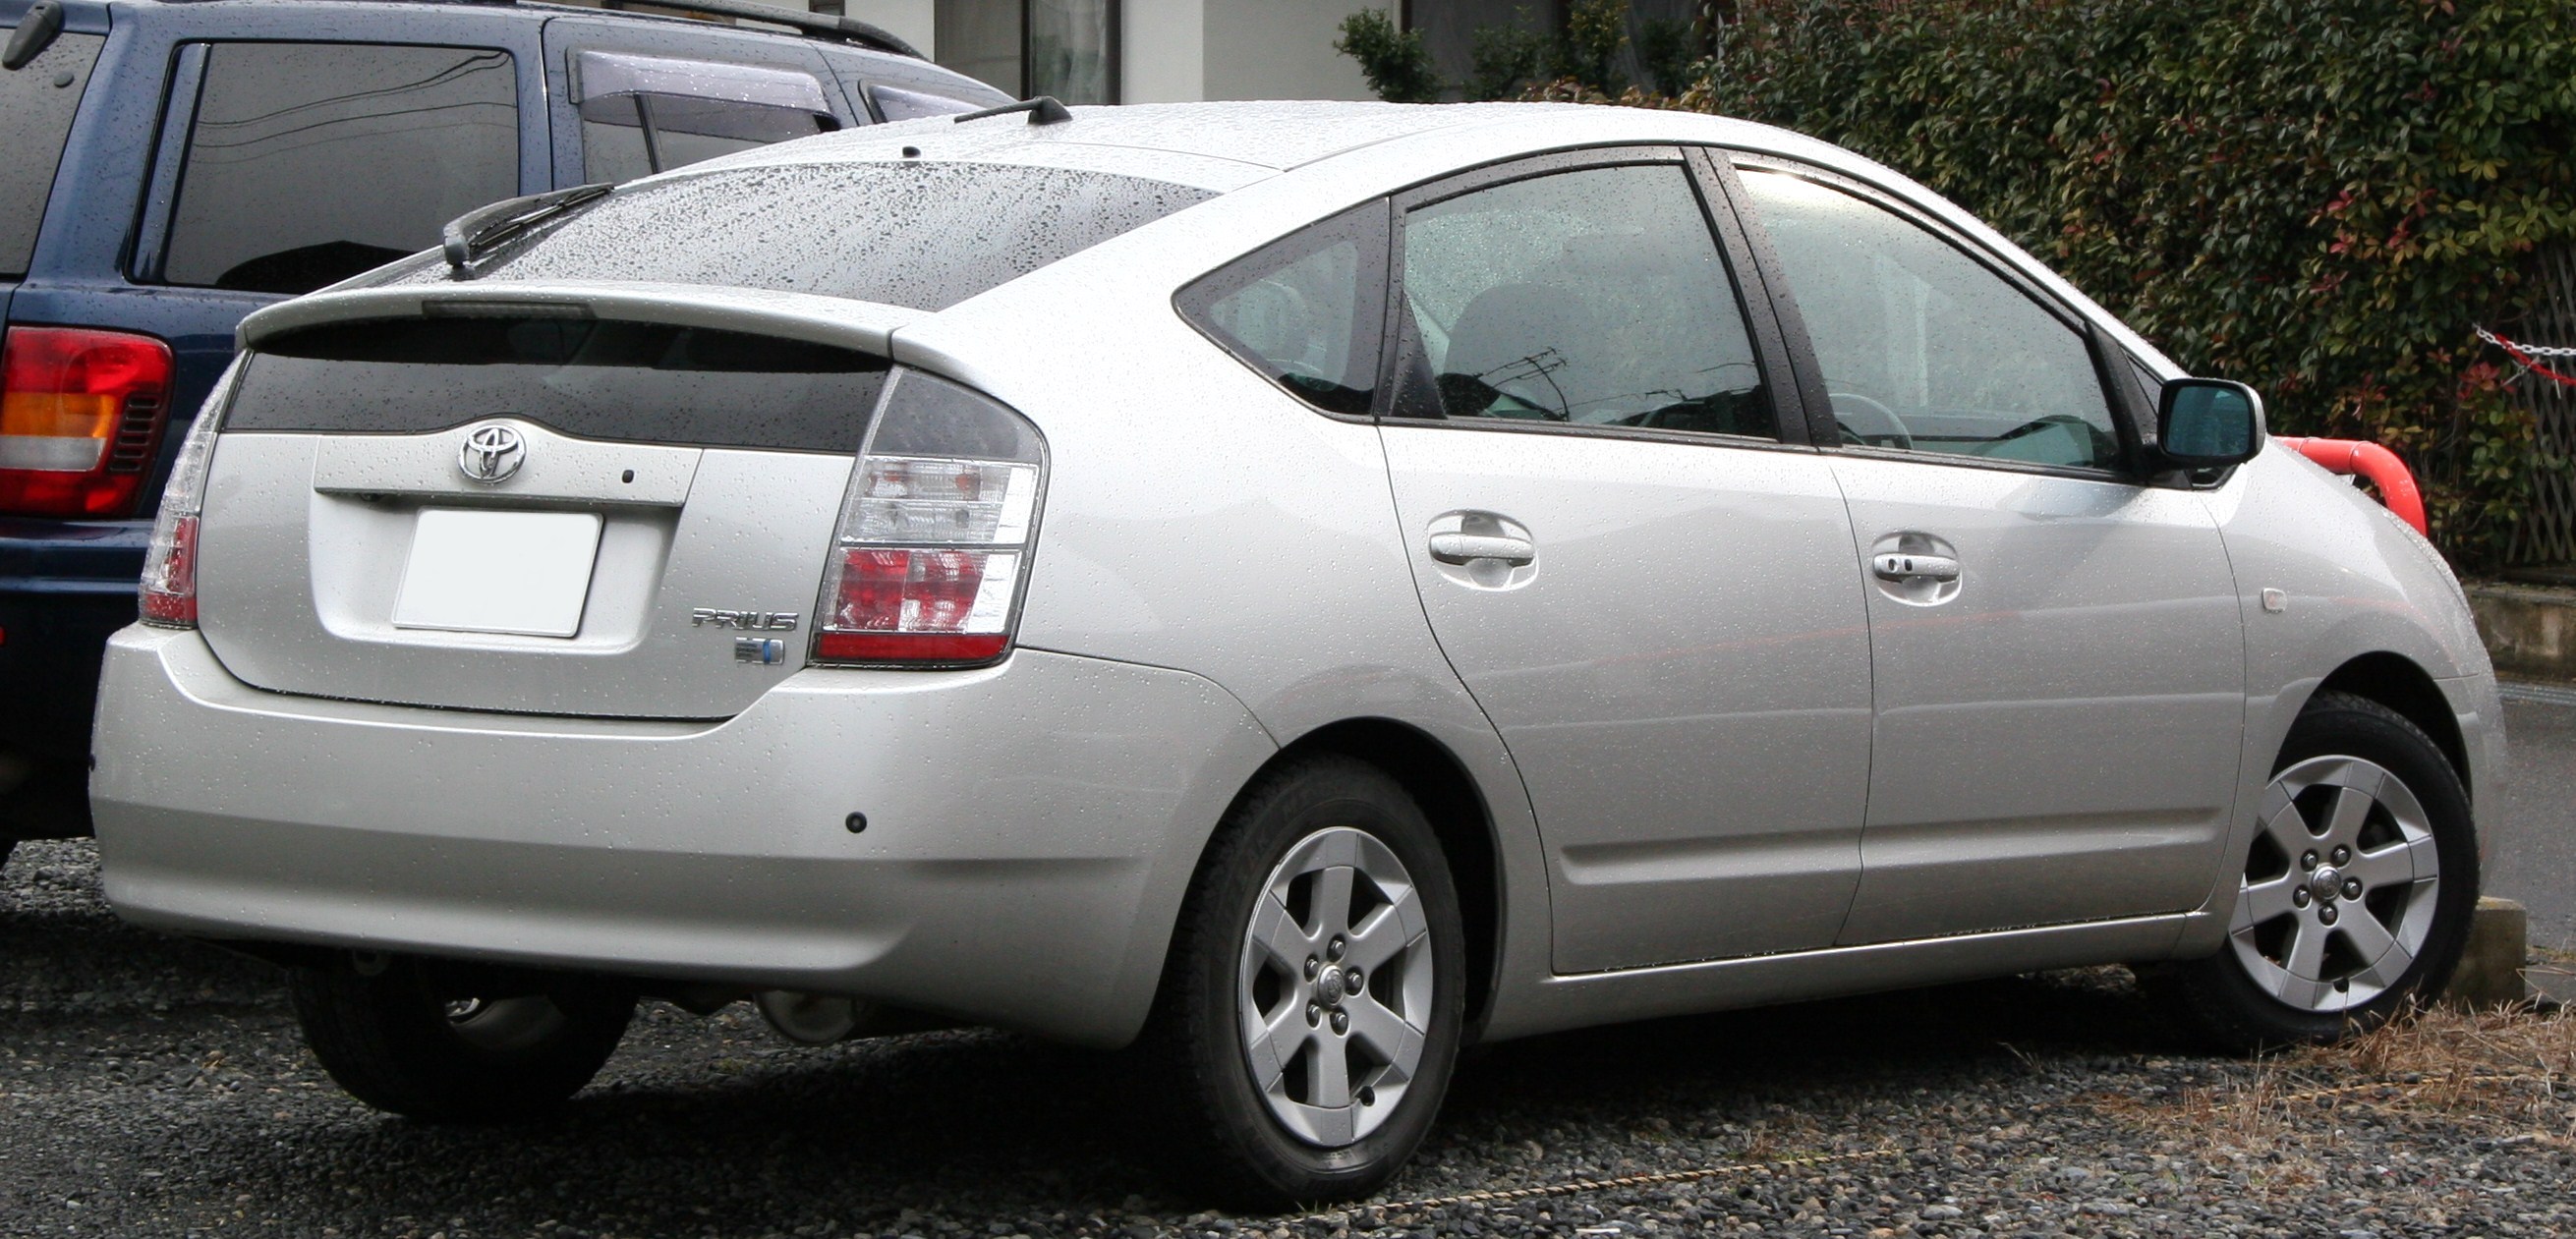 File:2003-2005 Toyota Prius rear.jpg - Wikipedia